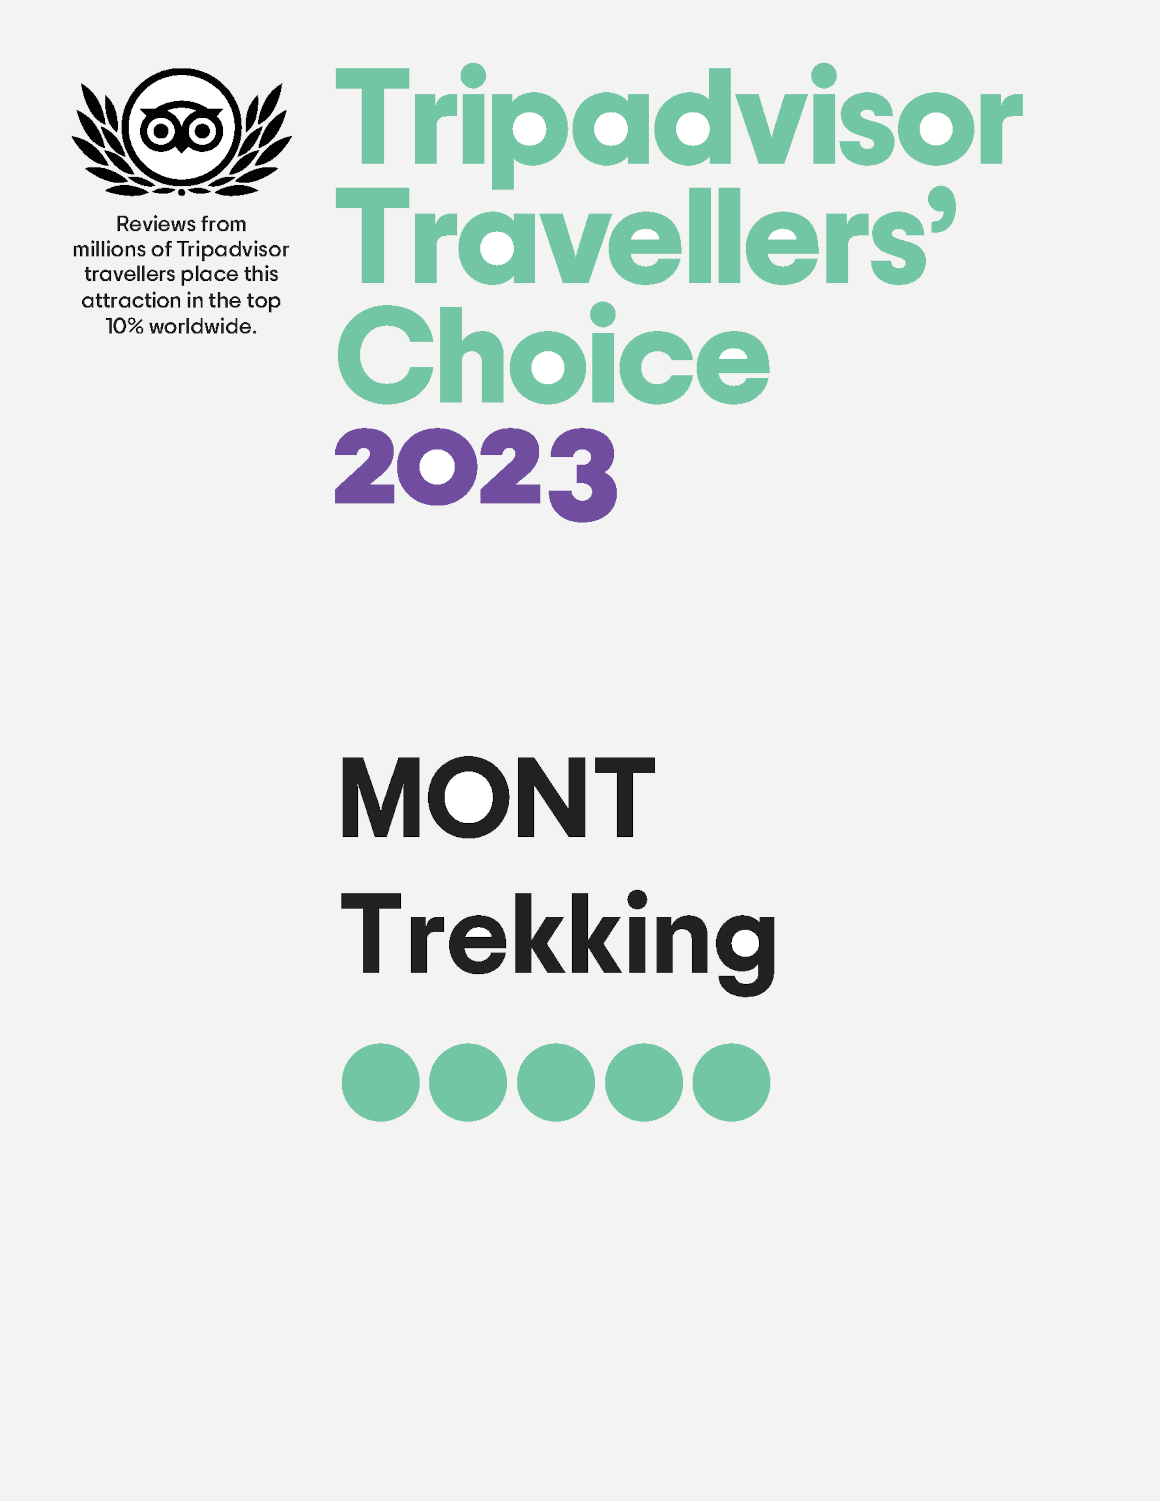 MONT Trekking TripAdvisor Traveler's Choice 2023